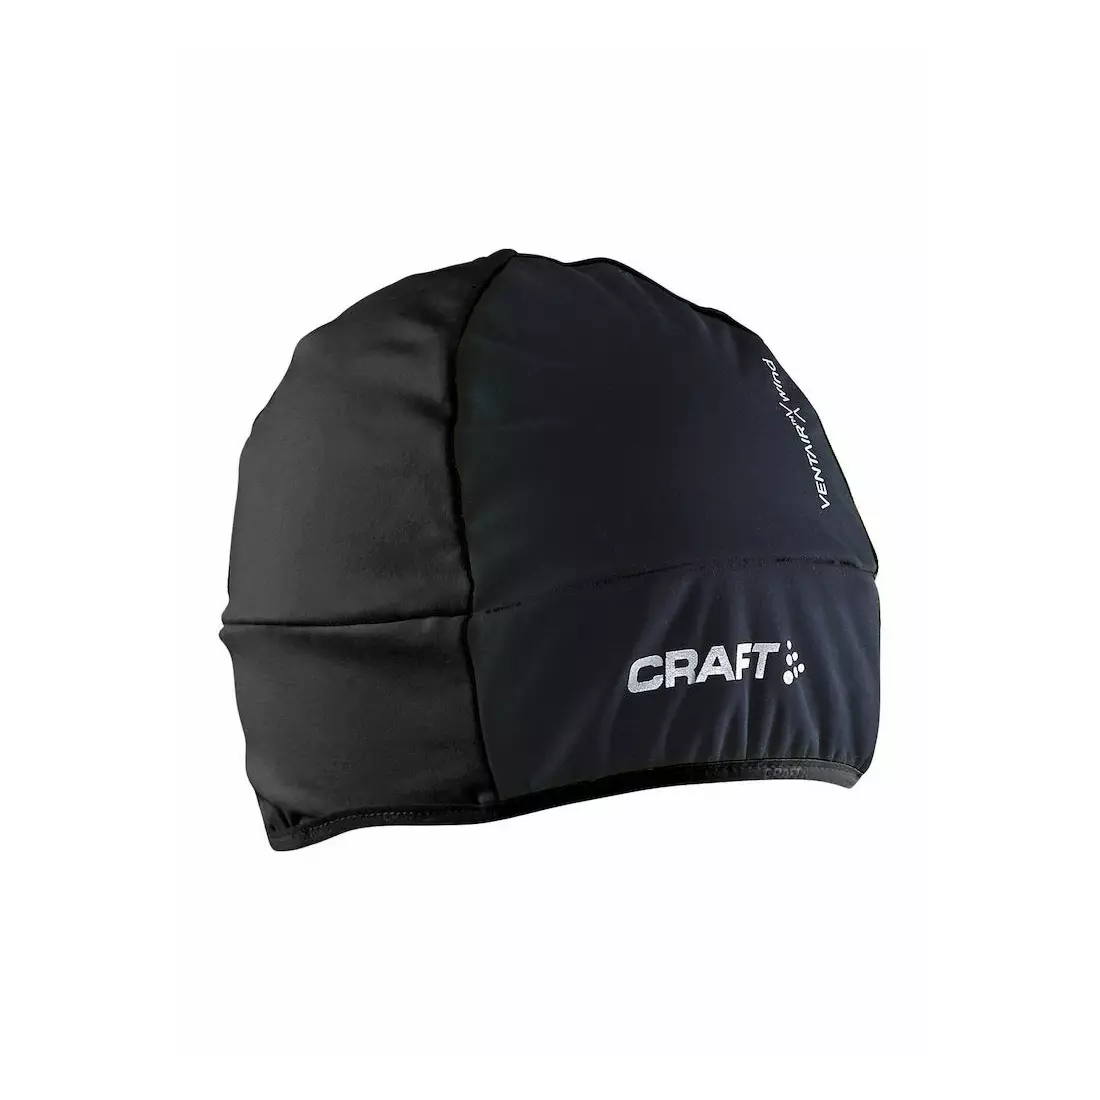 CRAFT WRAP HAT 1905548 -999000